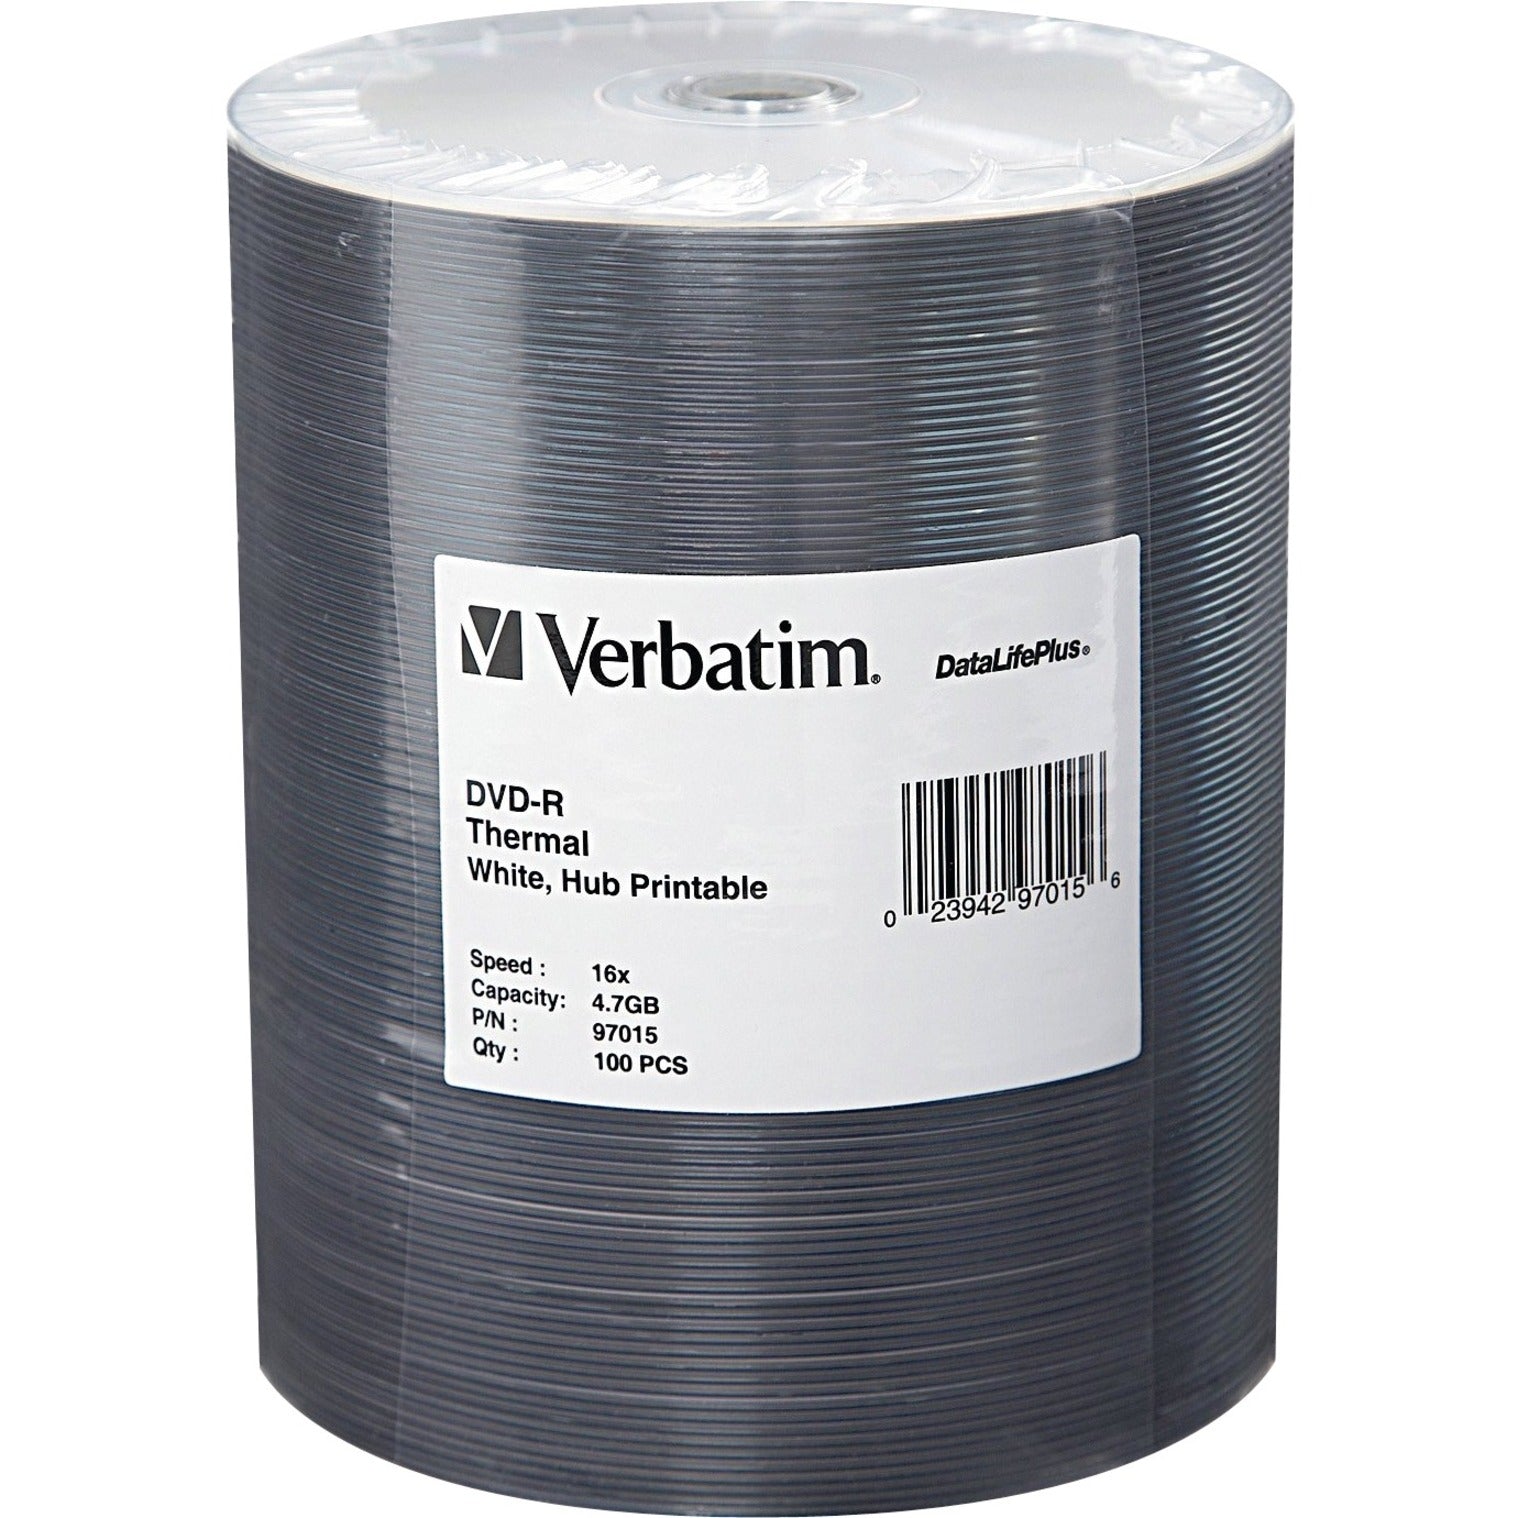 Verbatim 97015 DVD-R 4.7GB 16x DataLifePlus White Thermal Hub Printable 100pk Wrap, Lifetime Warranty